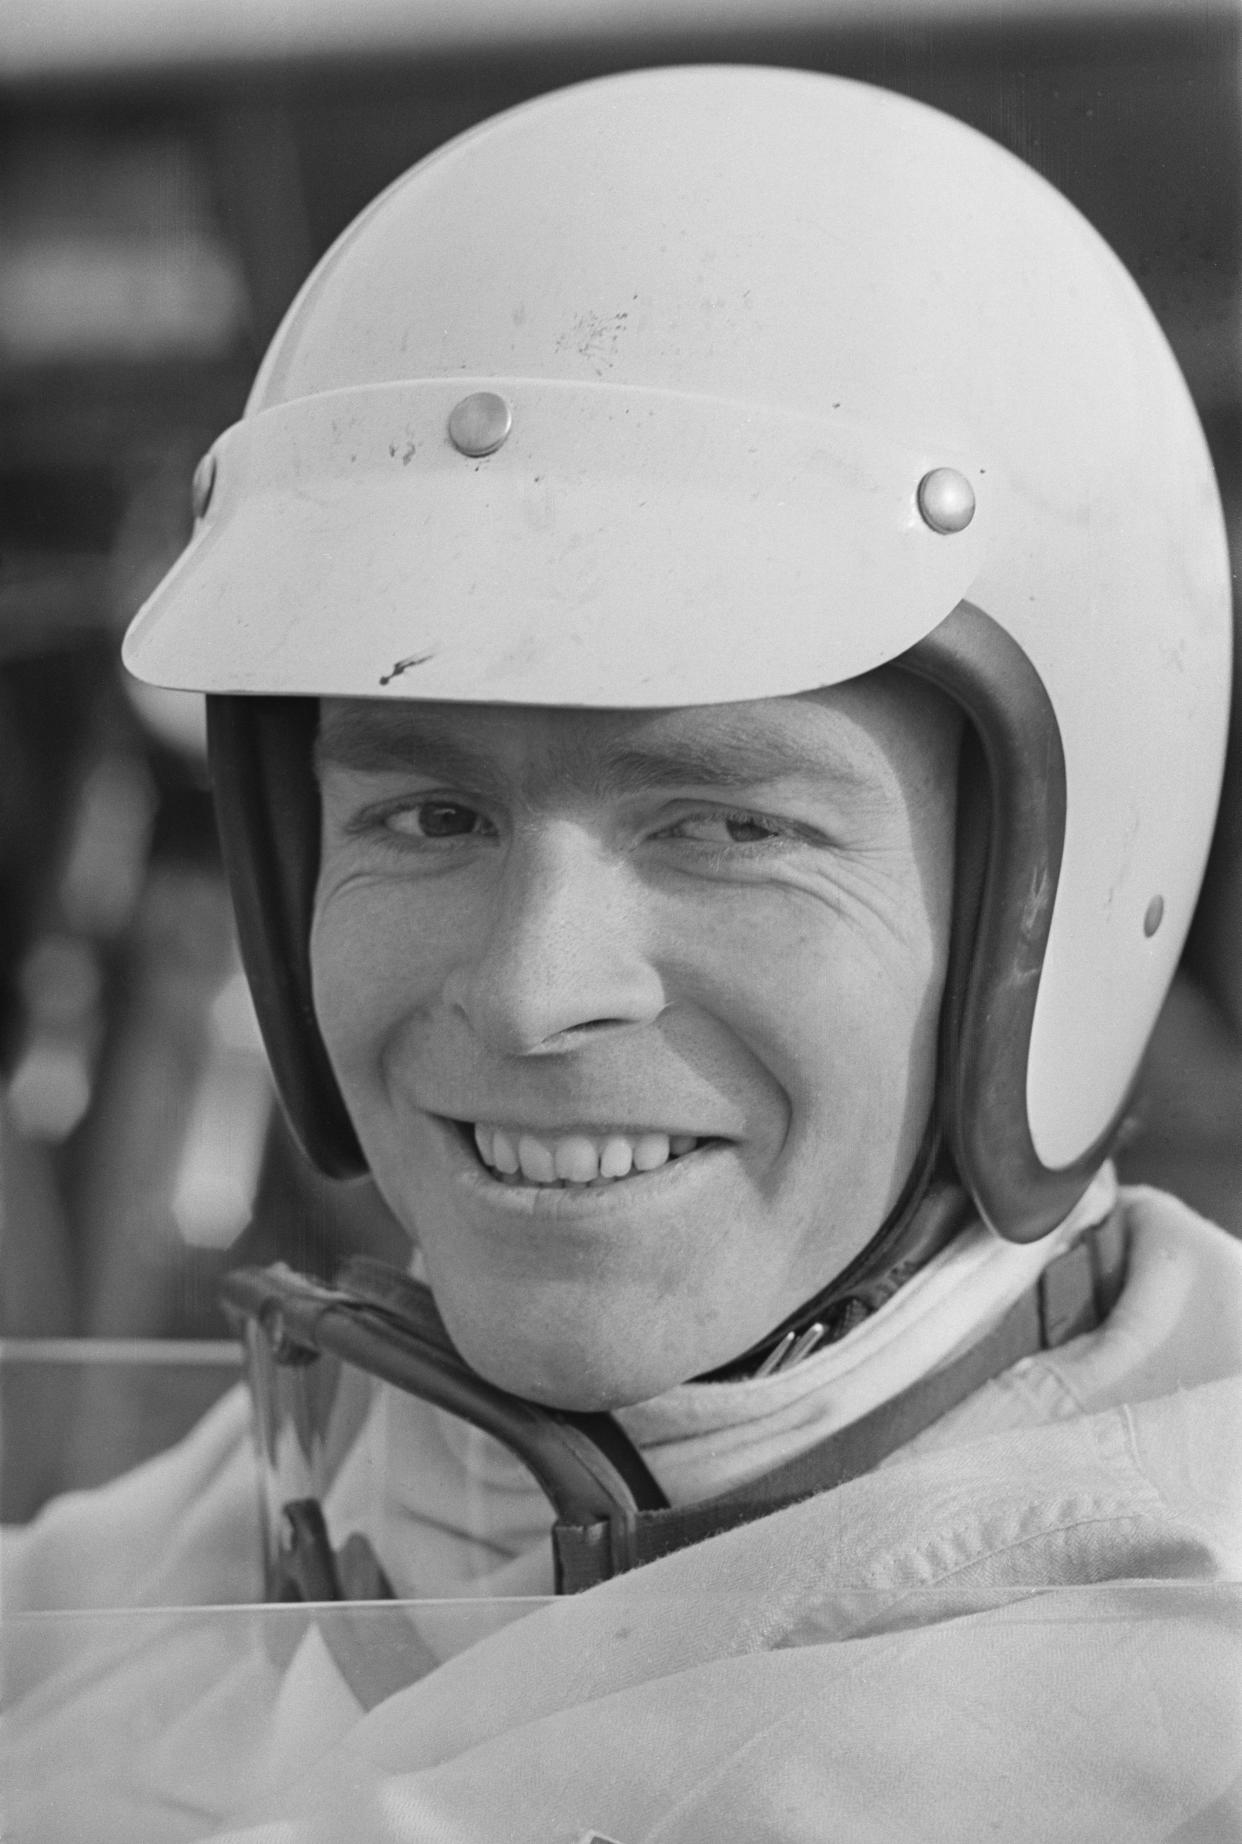 Foto de archivo del piloto amateur británico Max Mosley enfebrero de 1968. (Foto: Clive Limpkin/Daily Express/Getty Images)